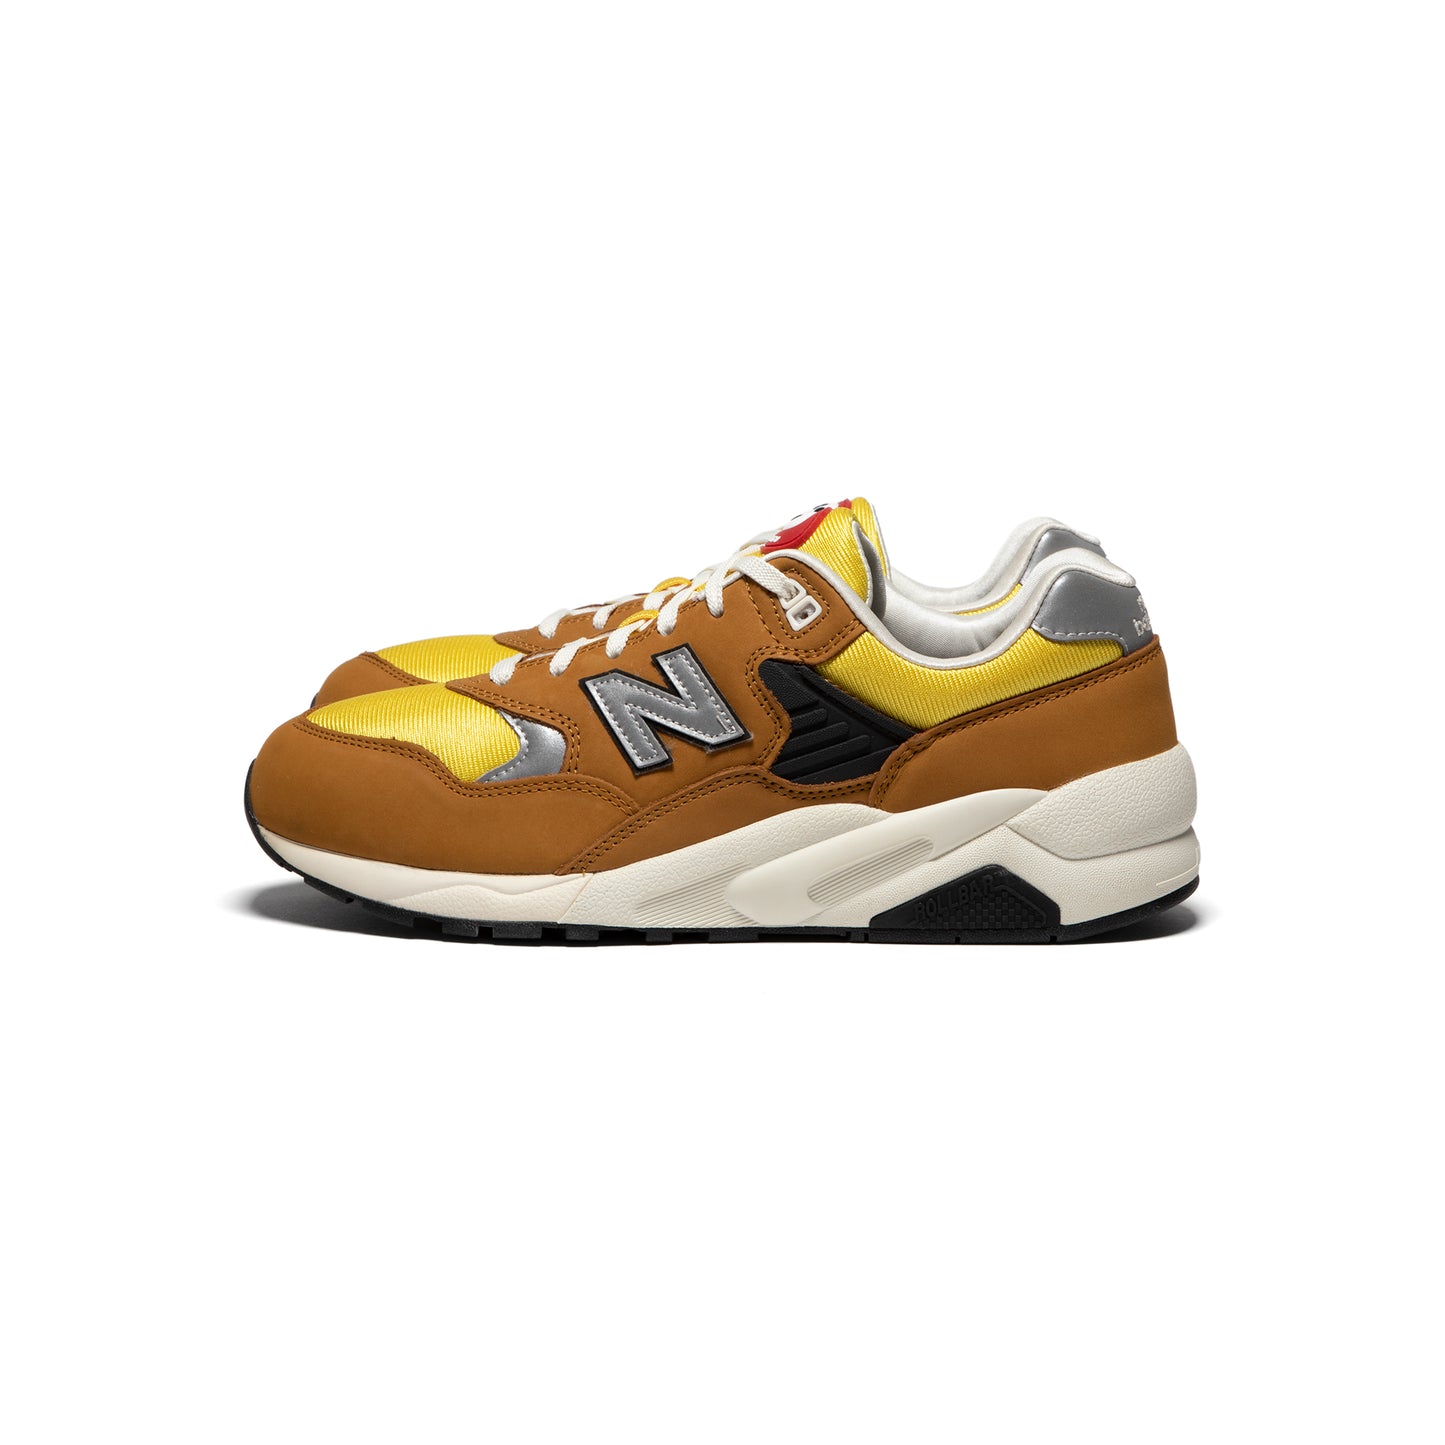 New Balance 580 (Orange/Yellow)